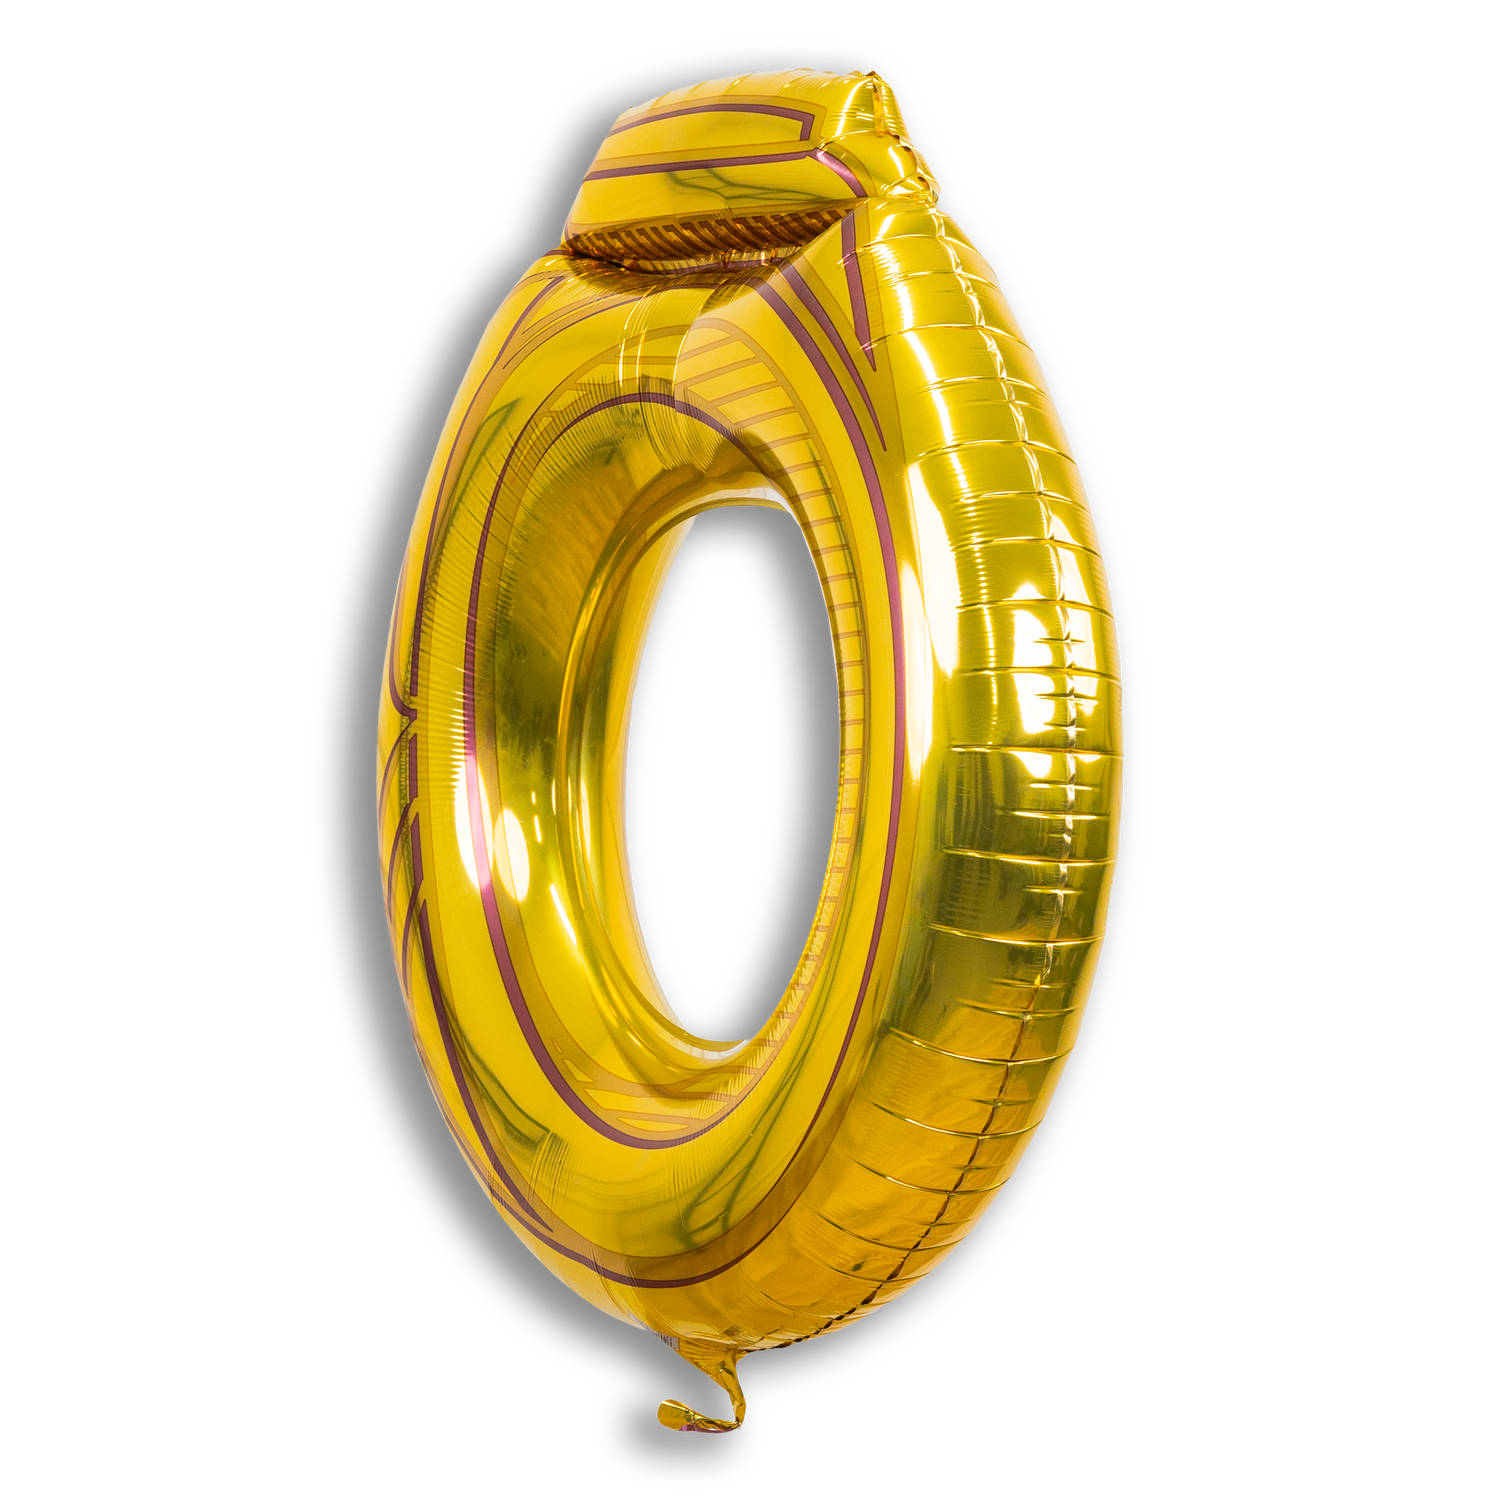 Bright Gold Ring Balloon